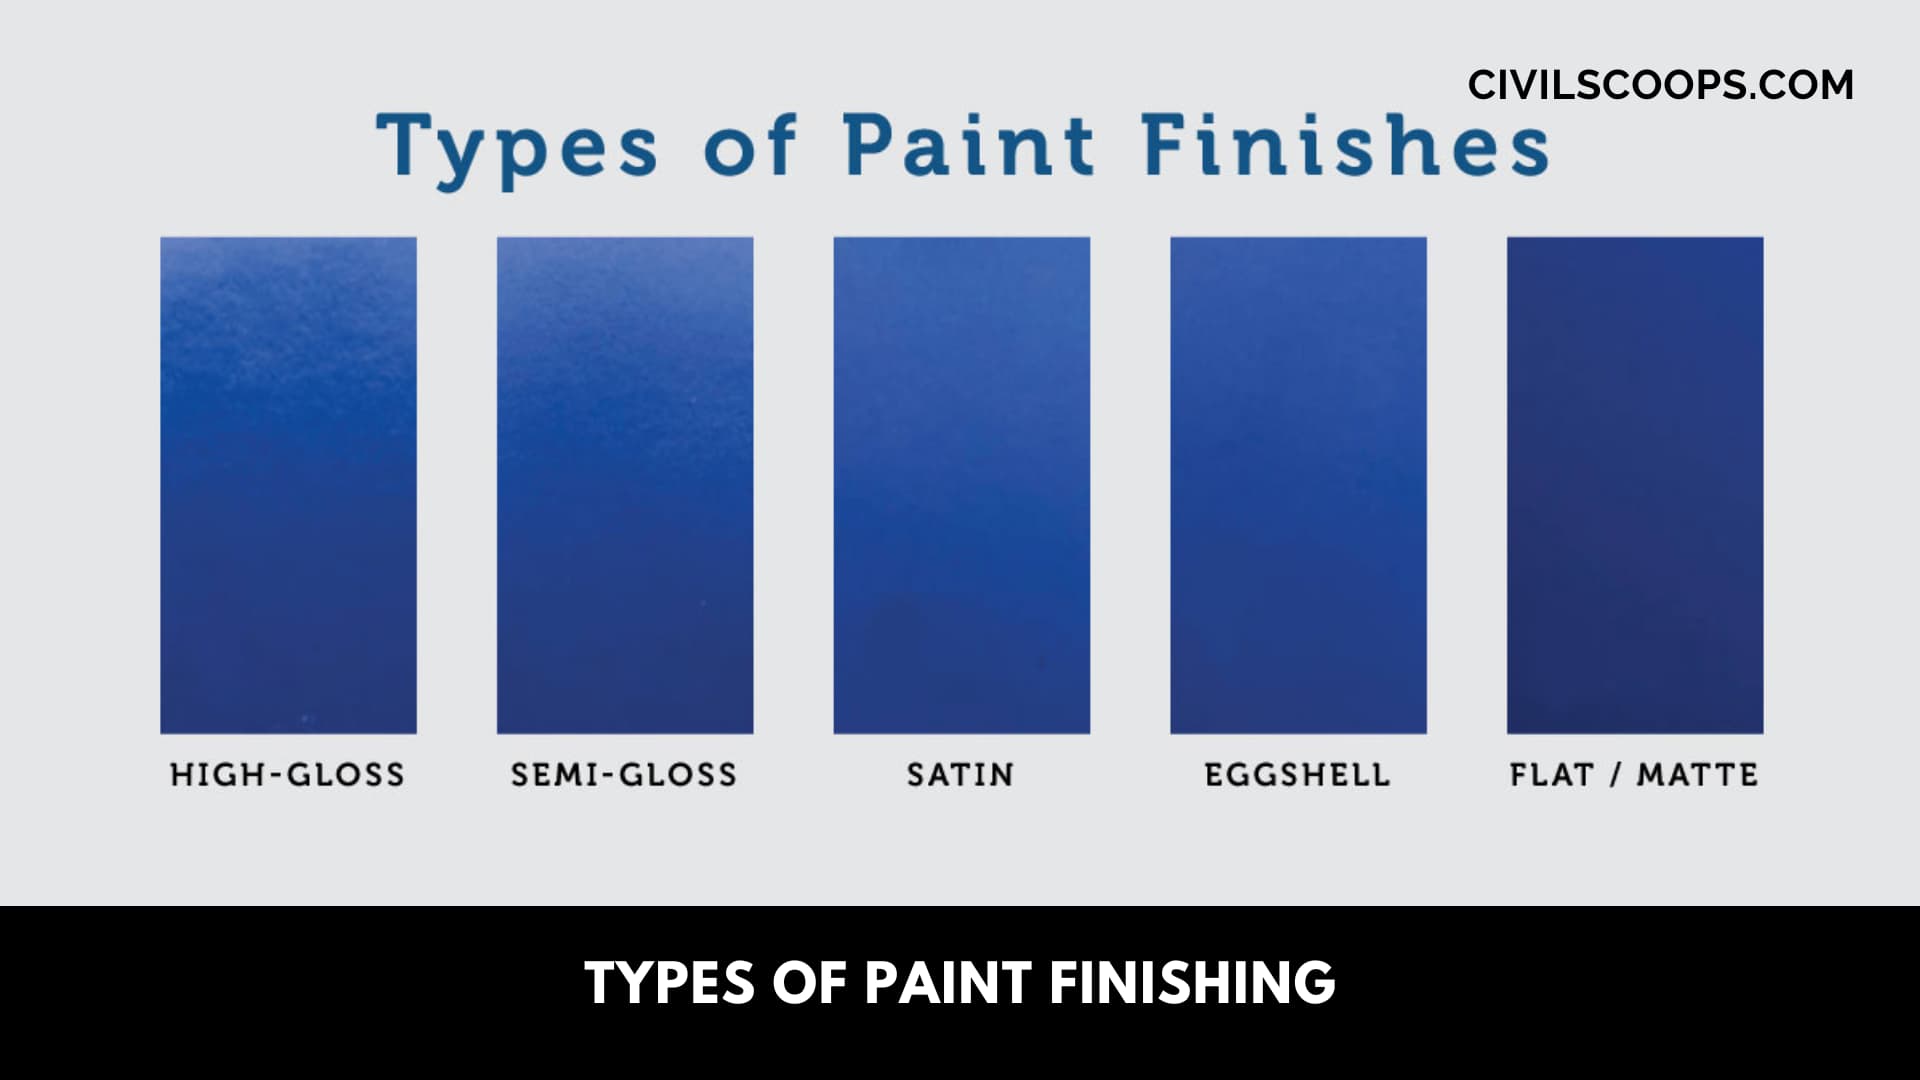 Types of Paint Finishing